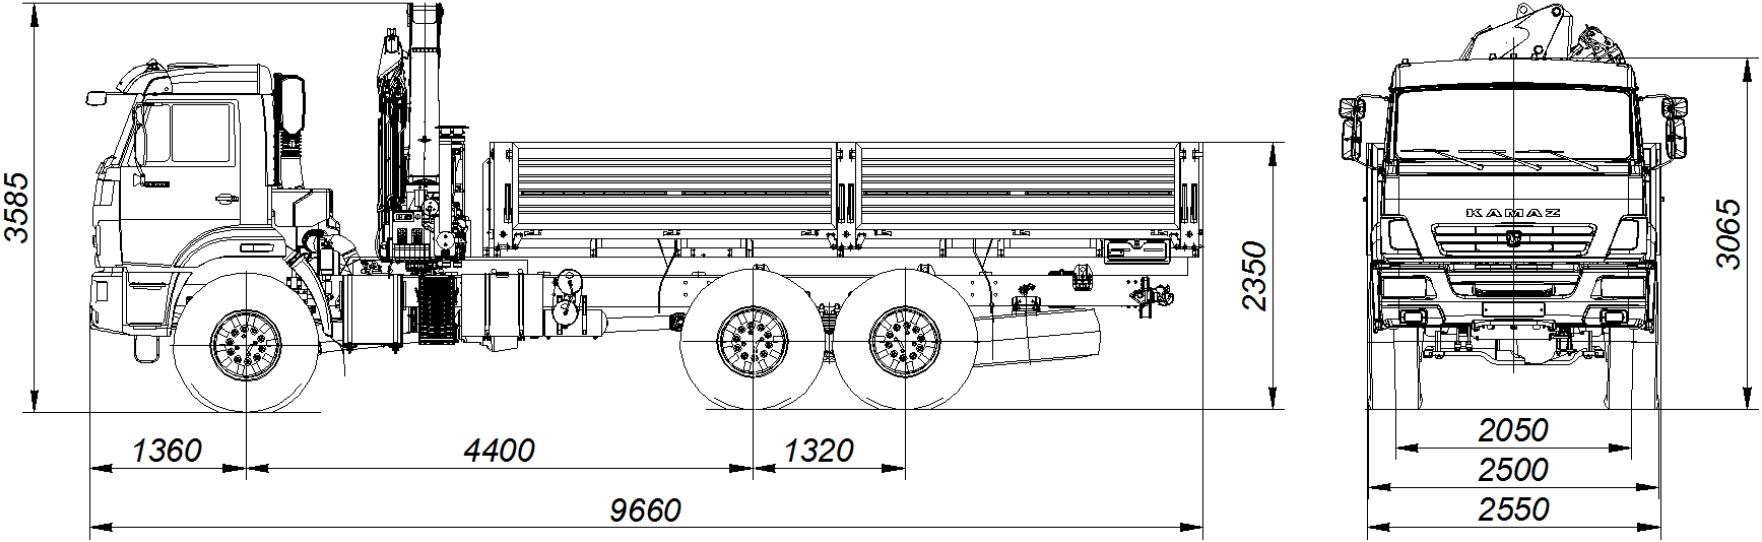 Камаз 43118: технические характеристики, эксплуатация, плюсы и минусы. грузовые автомобили газ, зил, камаз, урал, маз, краз